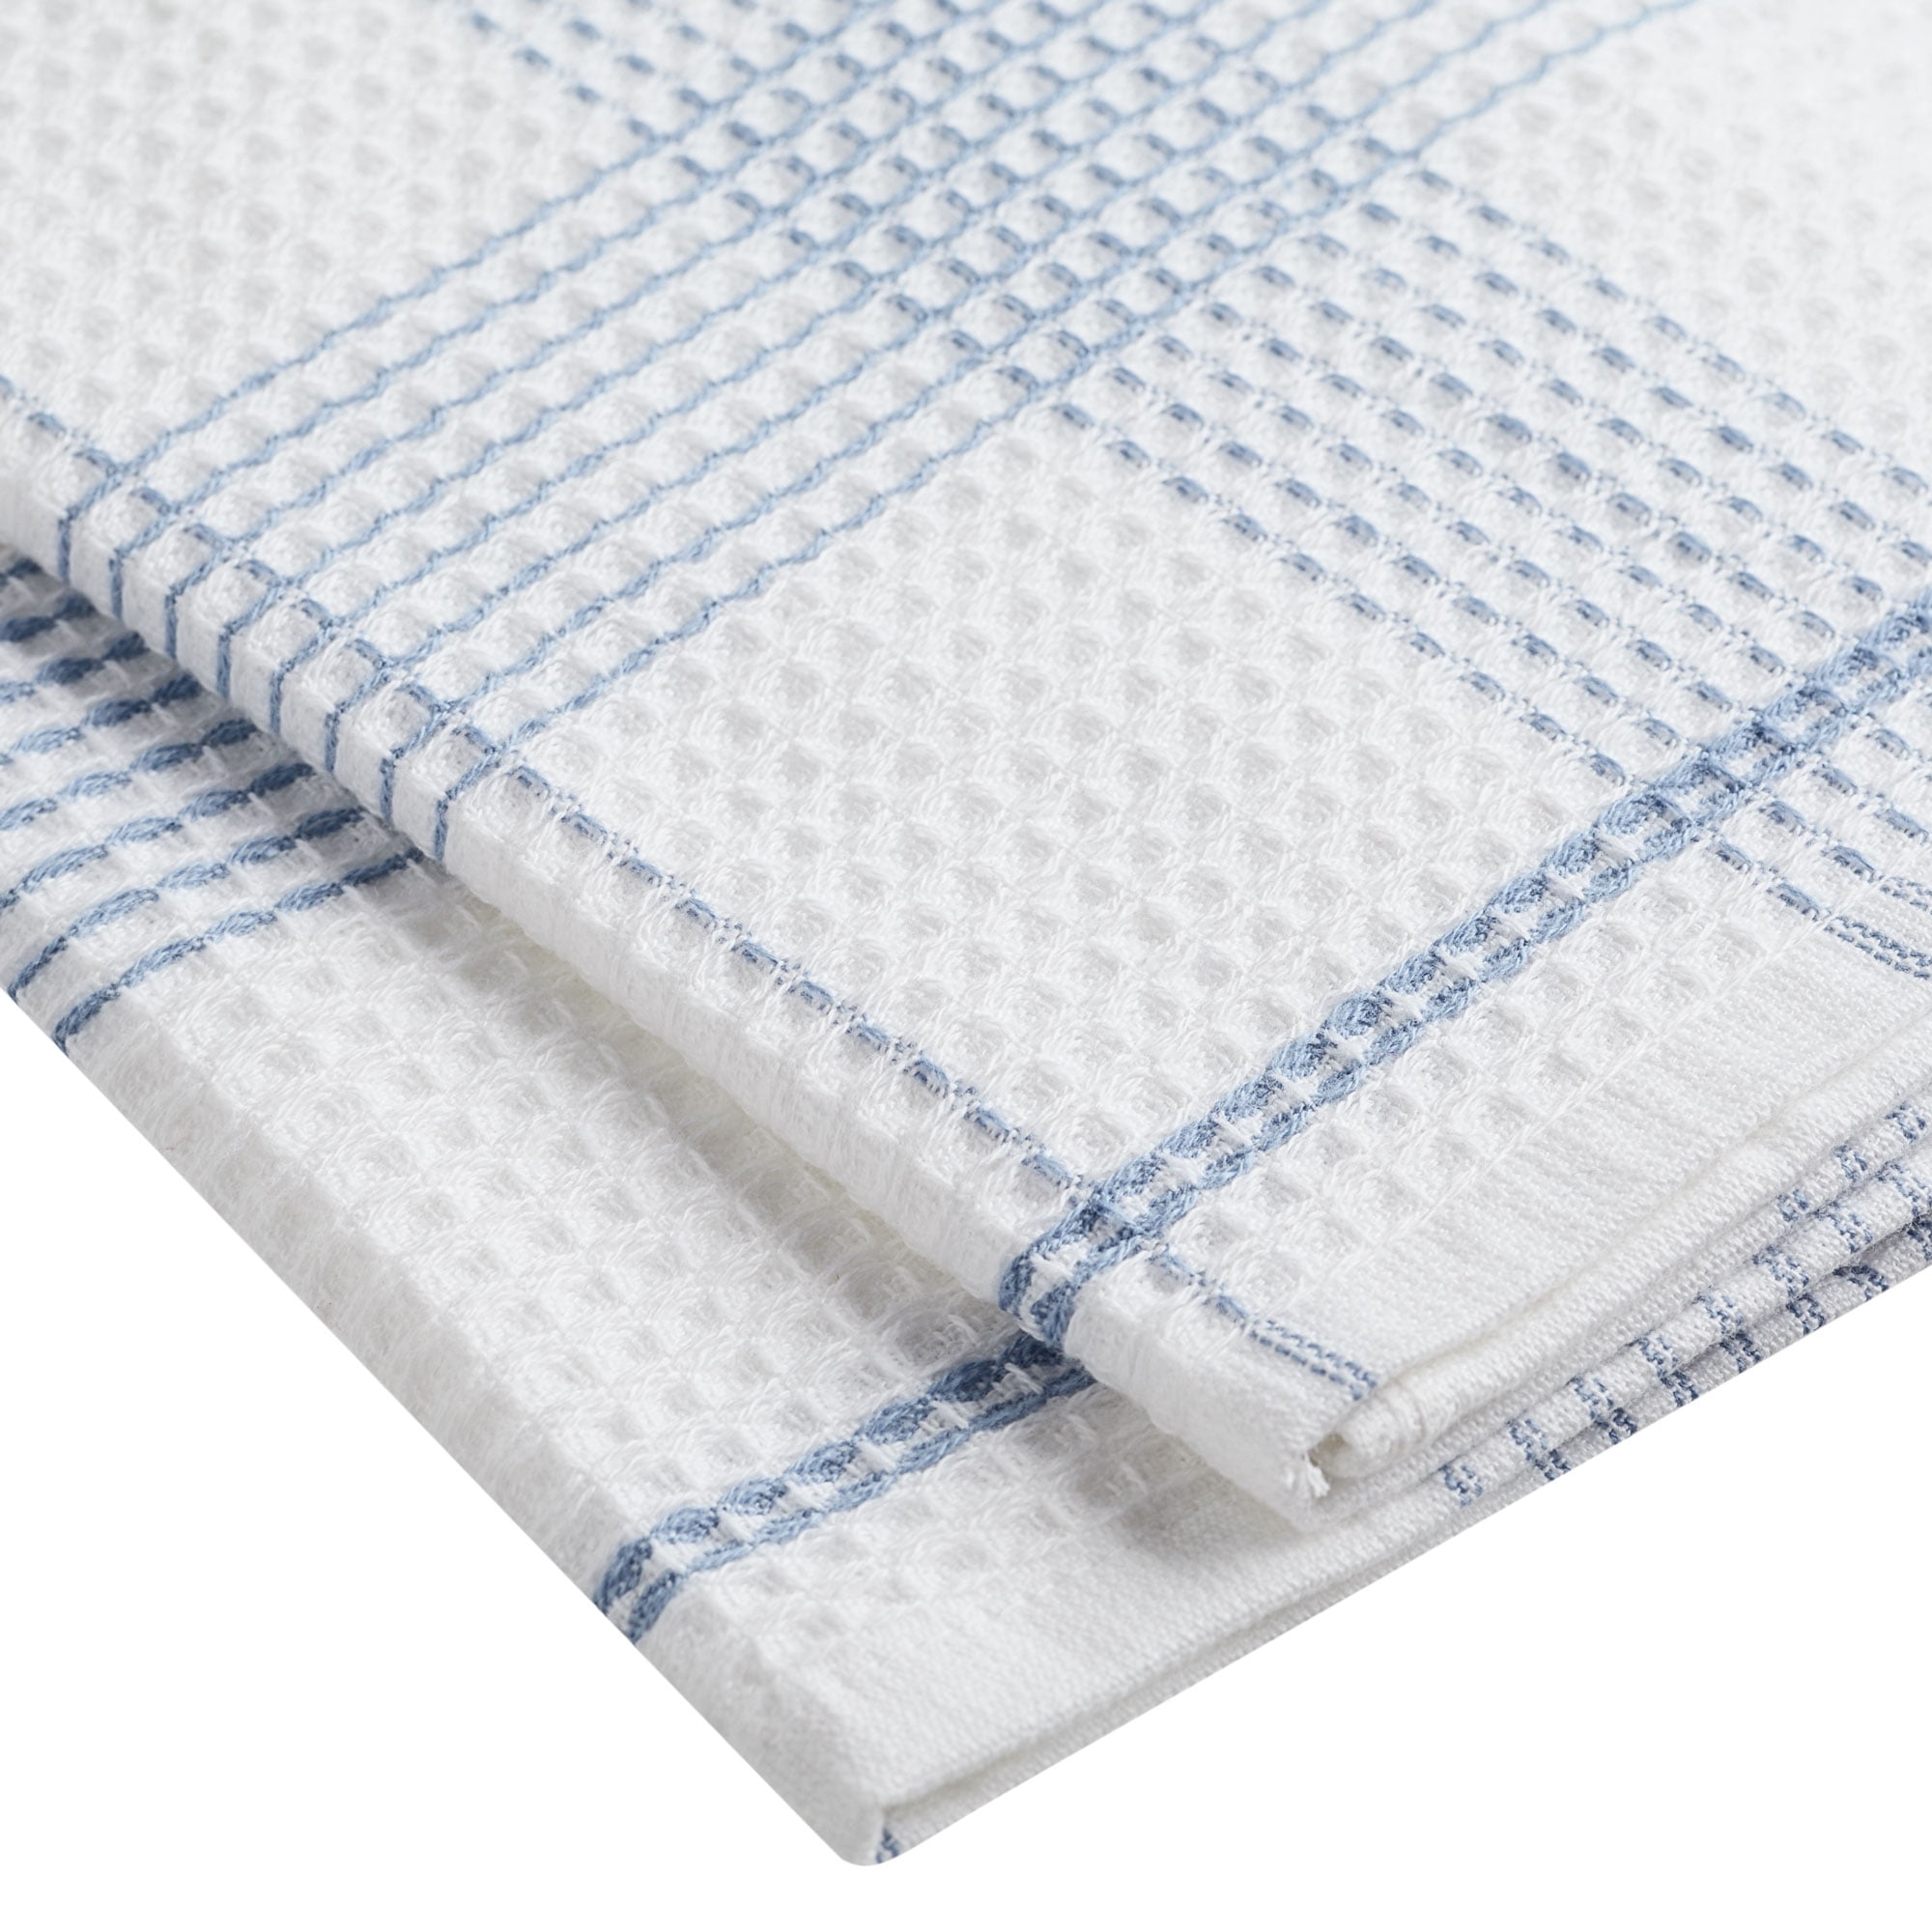 Trattoria Blue Linen Kitchen Towels Set/2